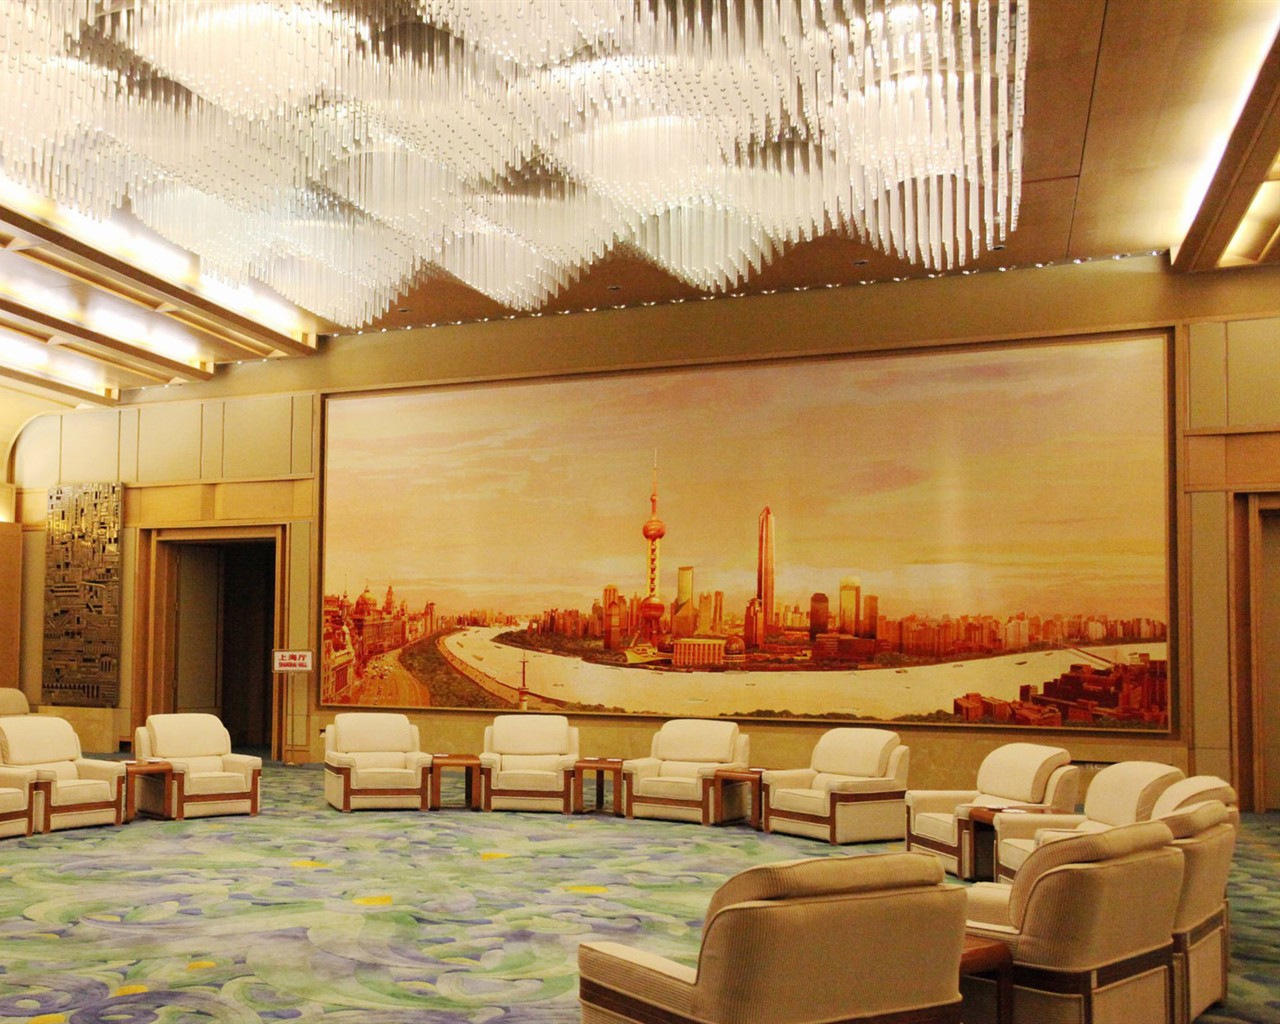 Beijing Tour - Great Hall (ggc works) #5 - 1280x1024